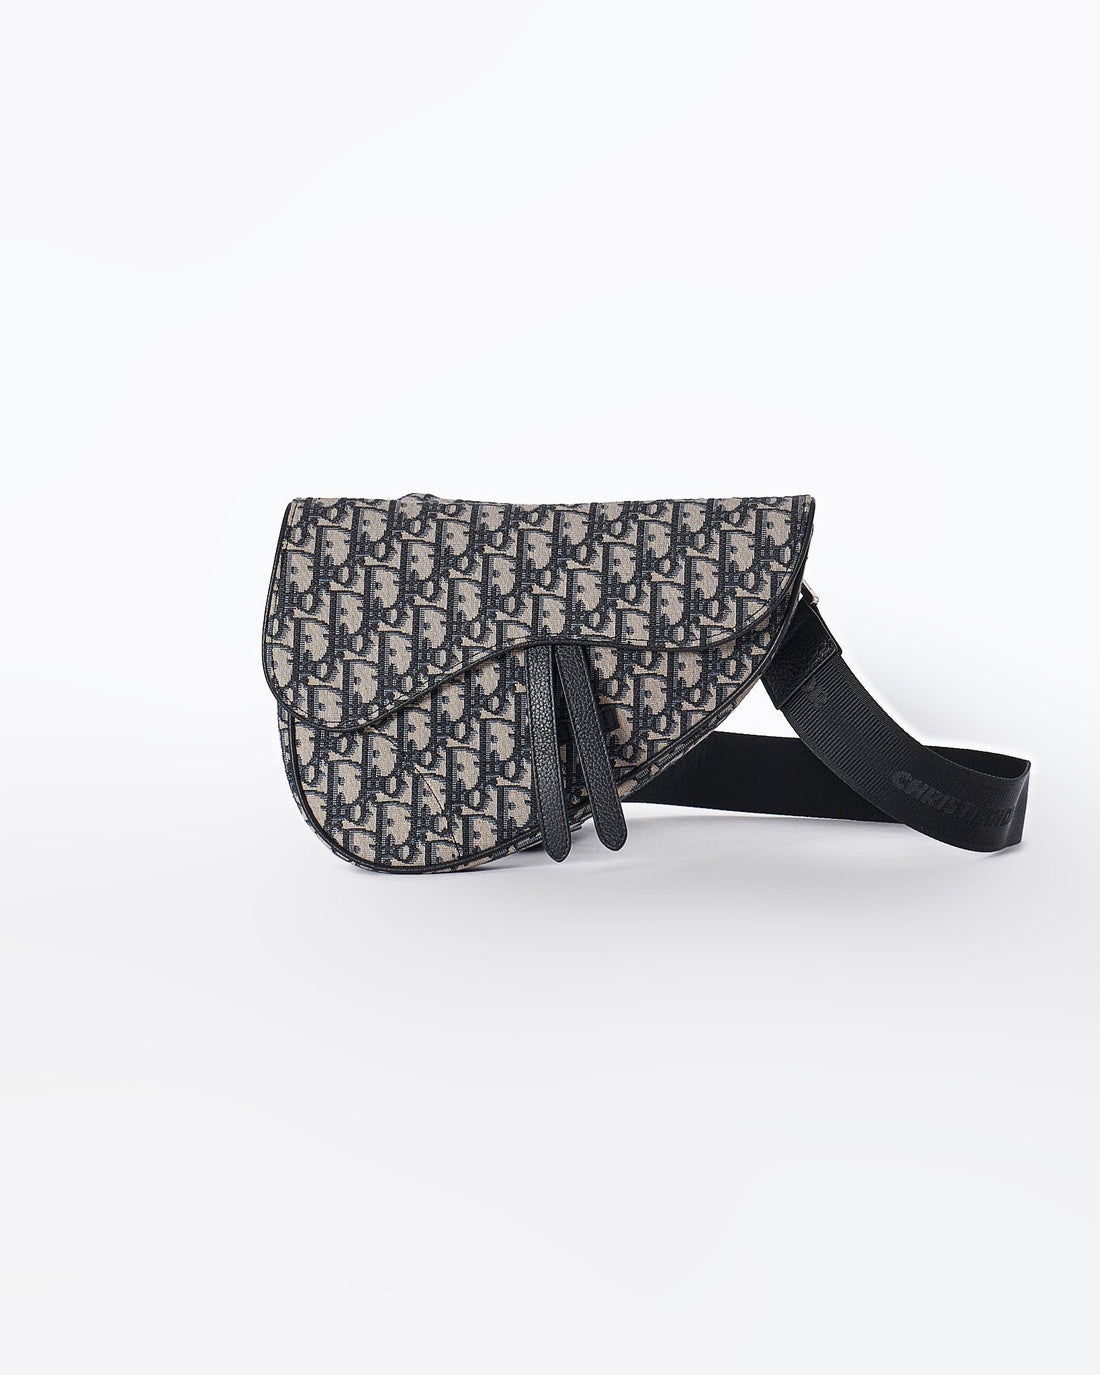 Dior Saddle Bag 84.90 - MOI OUTFIT